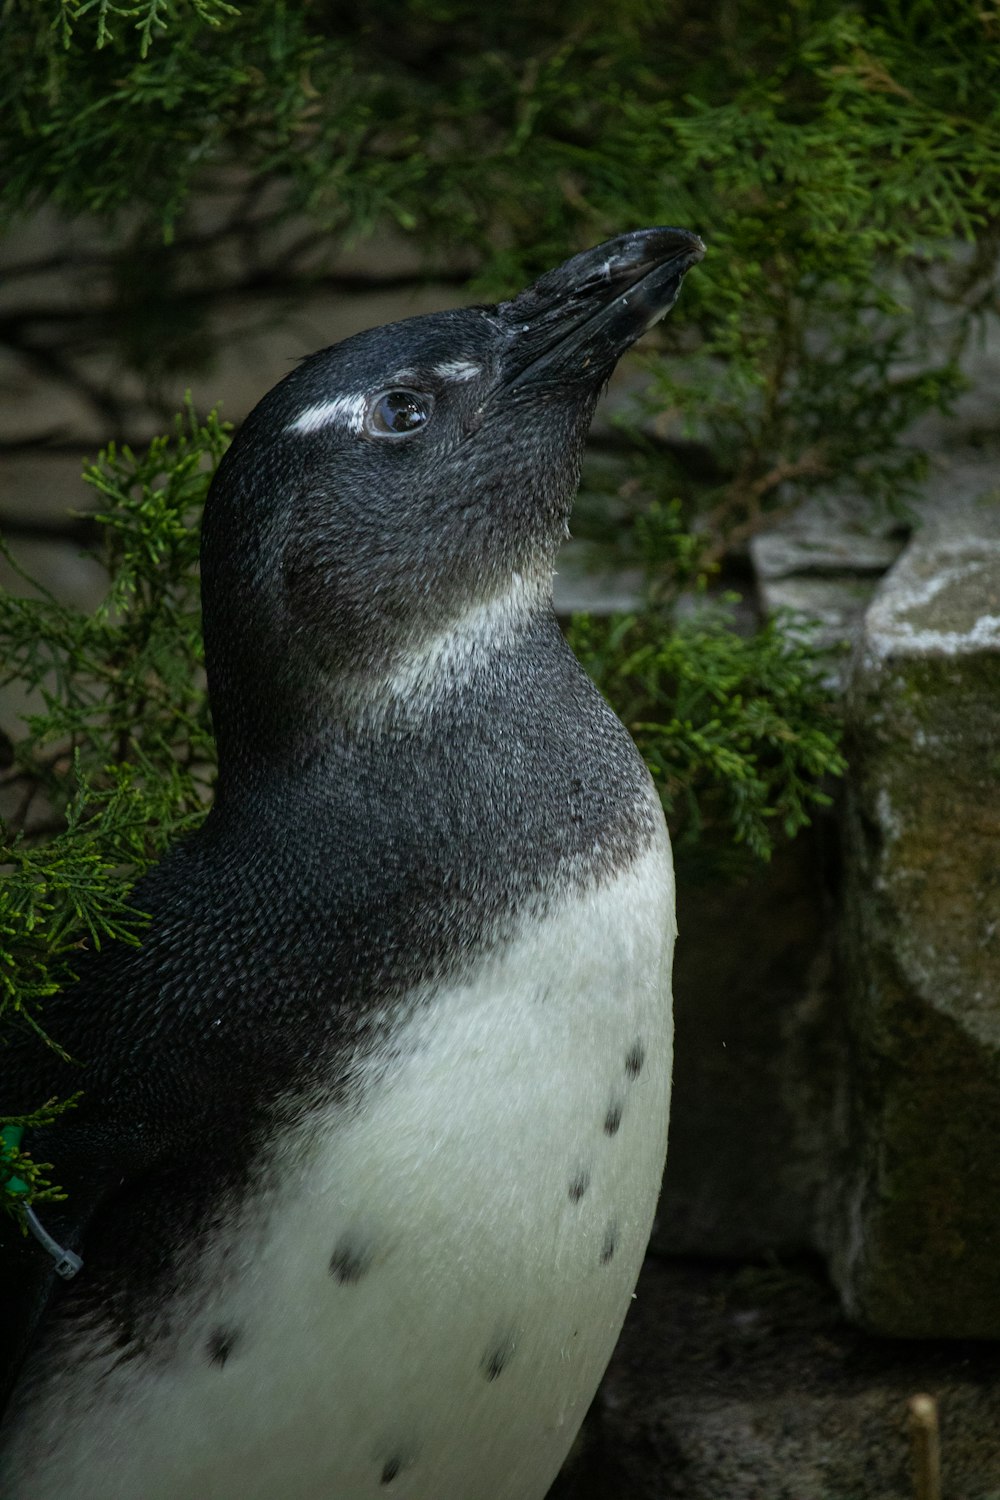 a close up of a penguin near a tree